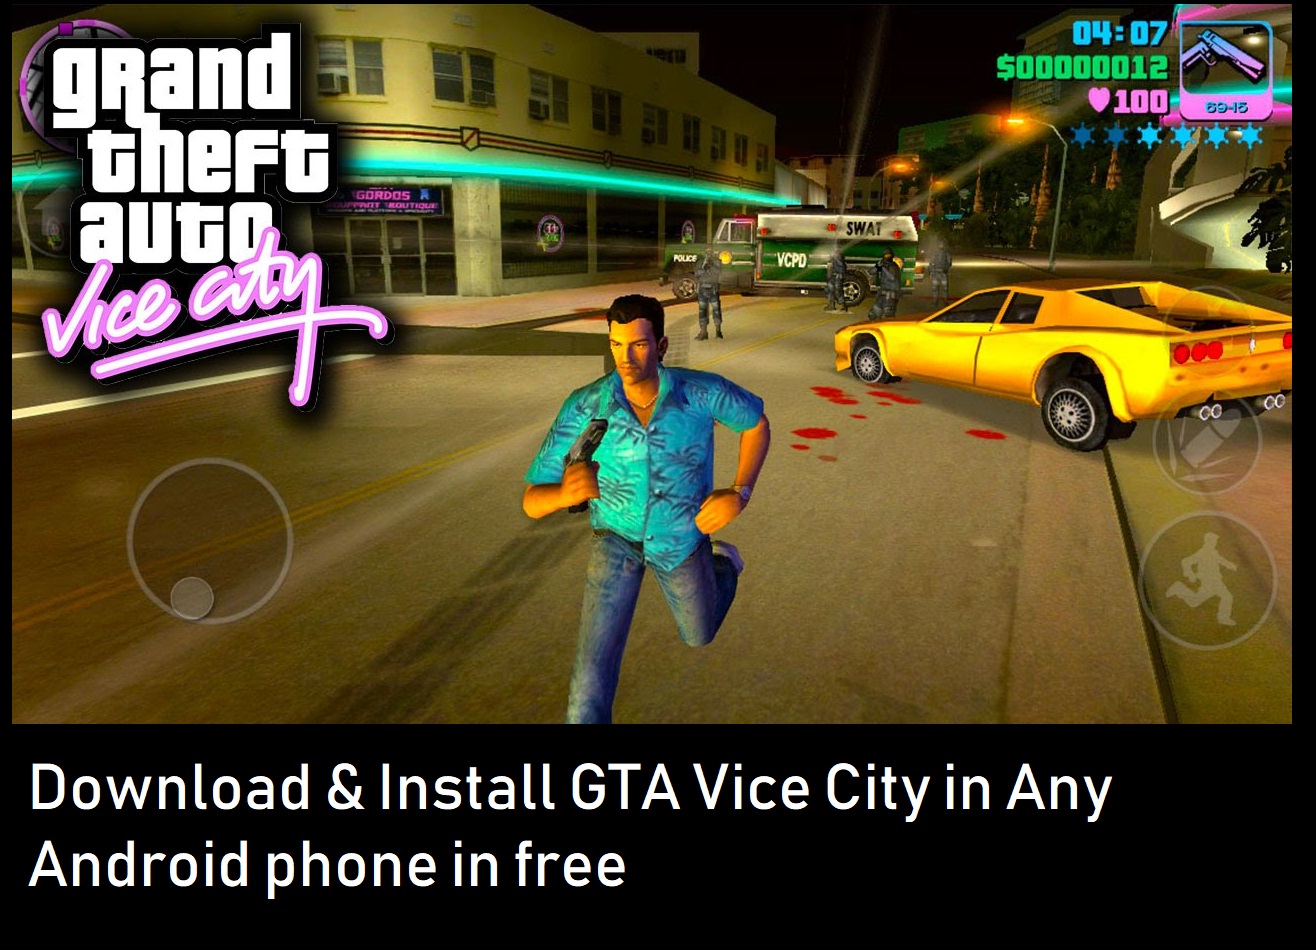 Gta v city game download free